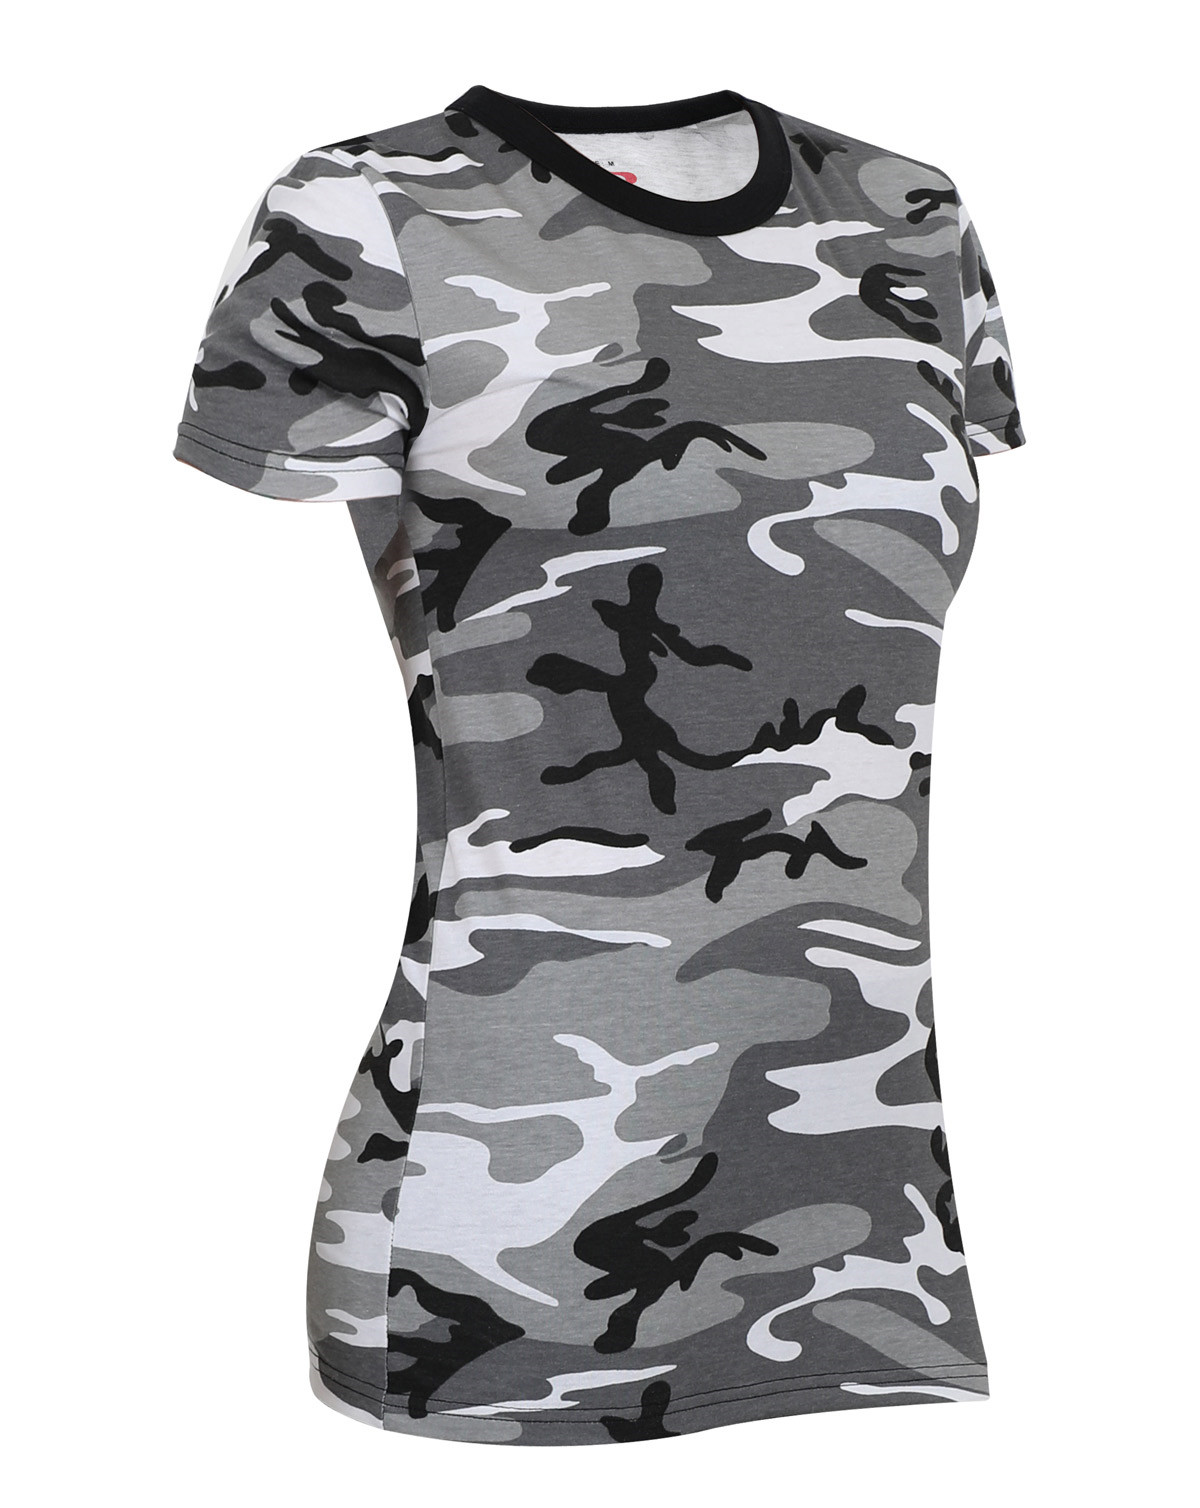 8: Rothco Camouflage T-Shirt (Urban Camo, 2XL)